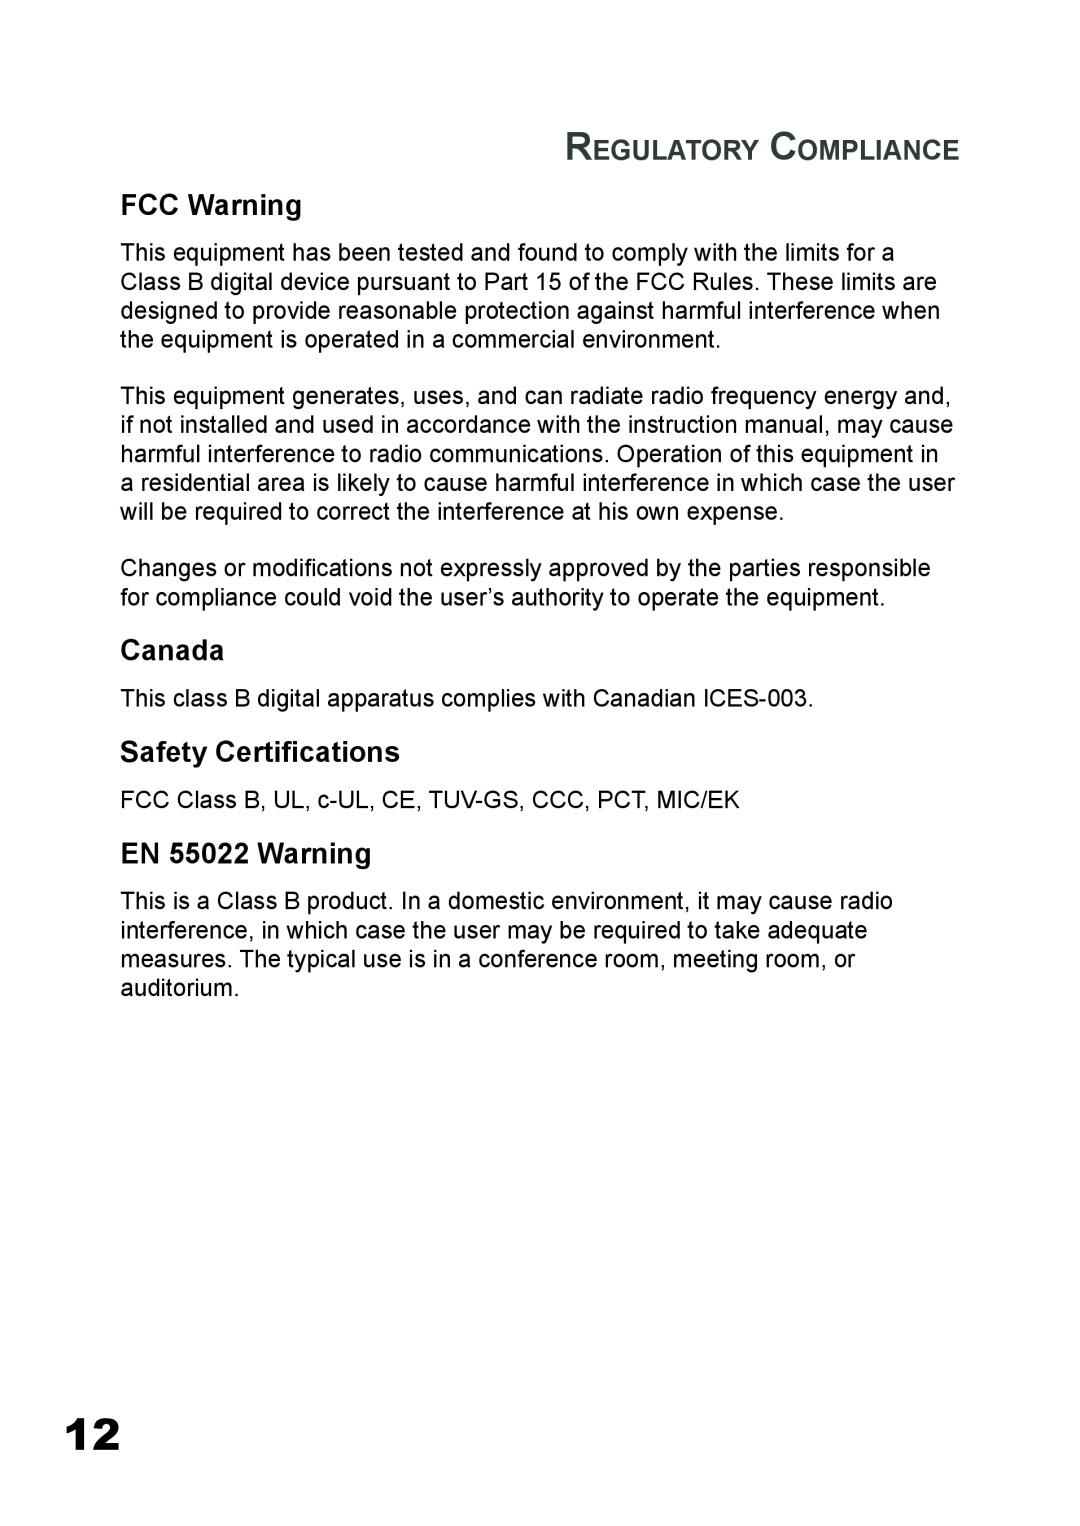 Planar PD4010 manual FCC Warning, Canada, Safety Certiﬁcations, EN 55022 Warning, Regulatory Compliance 